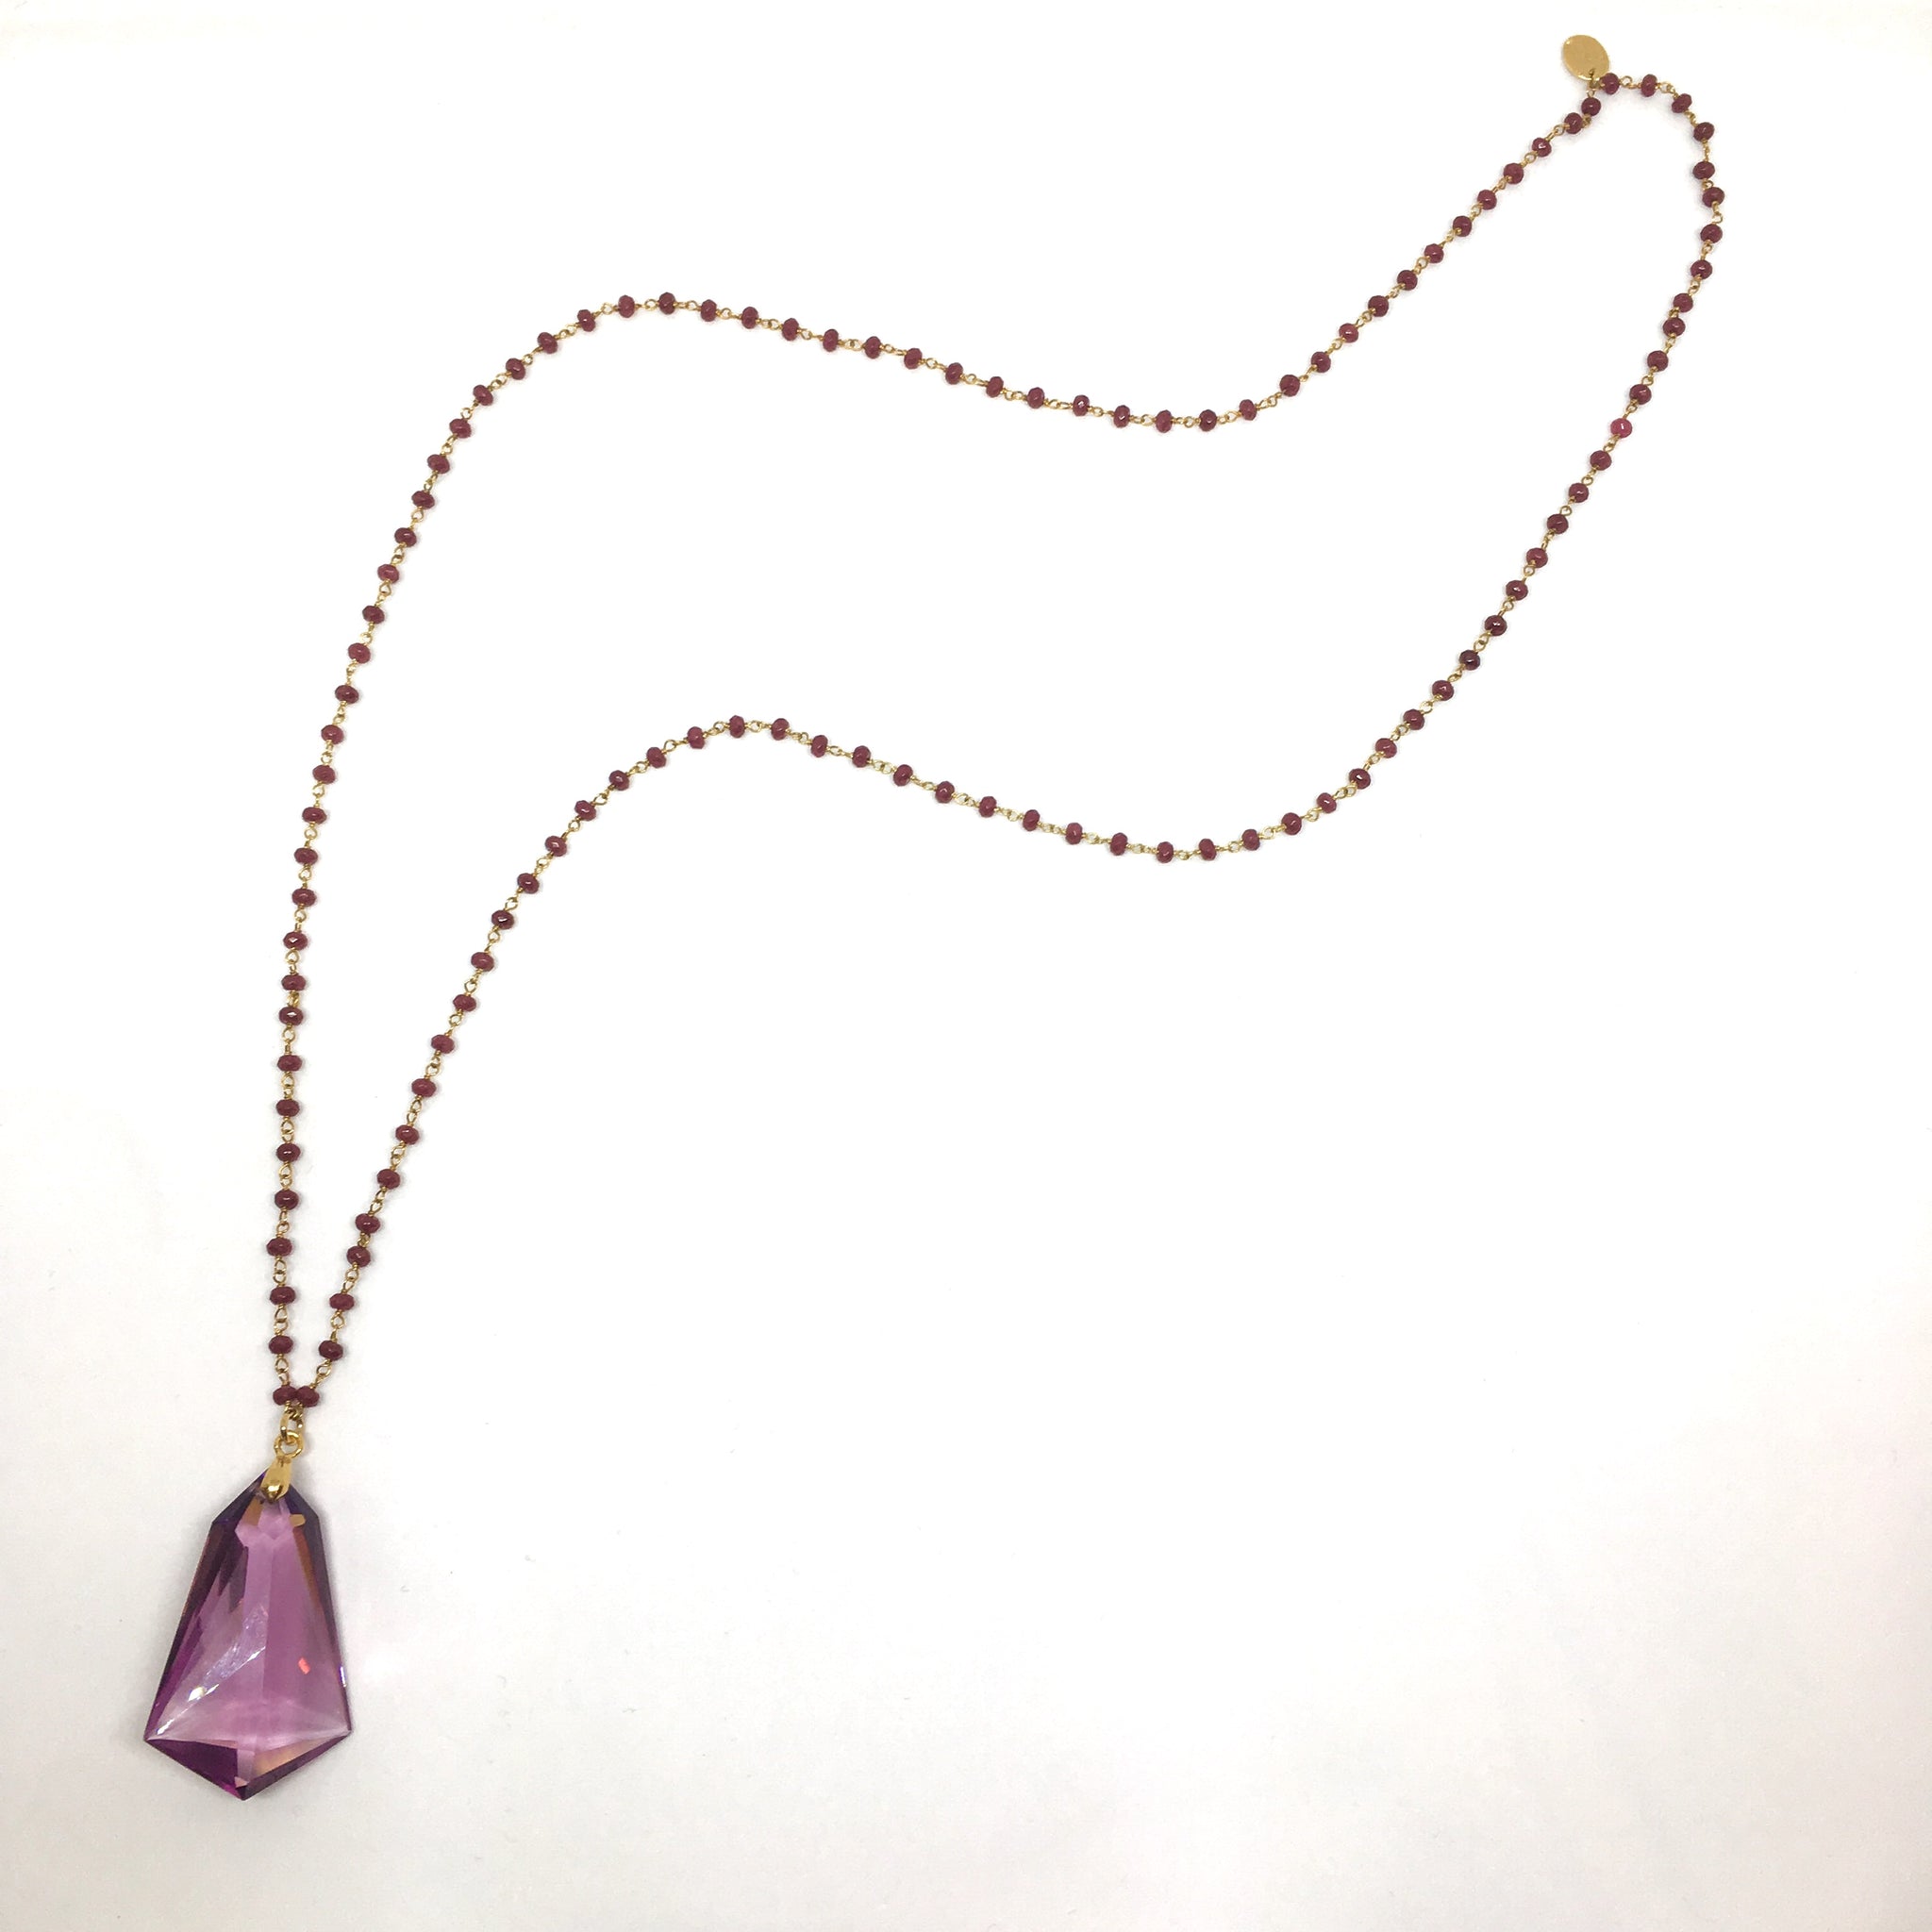 Garnet long necklace and vintage amethyst pendant